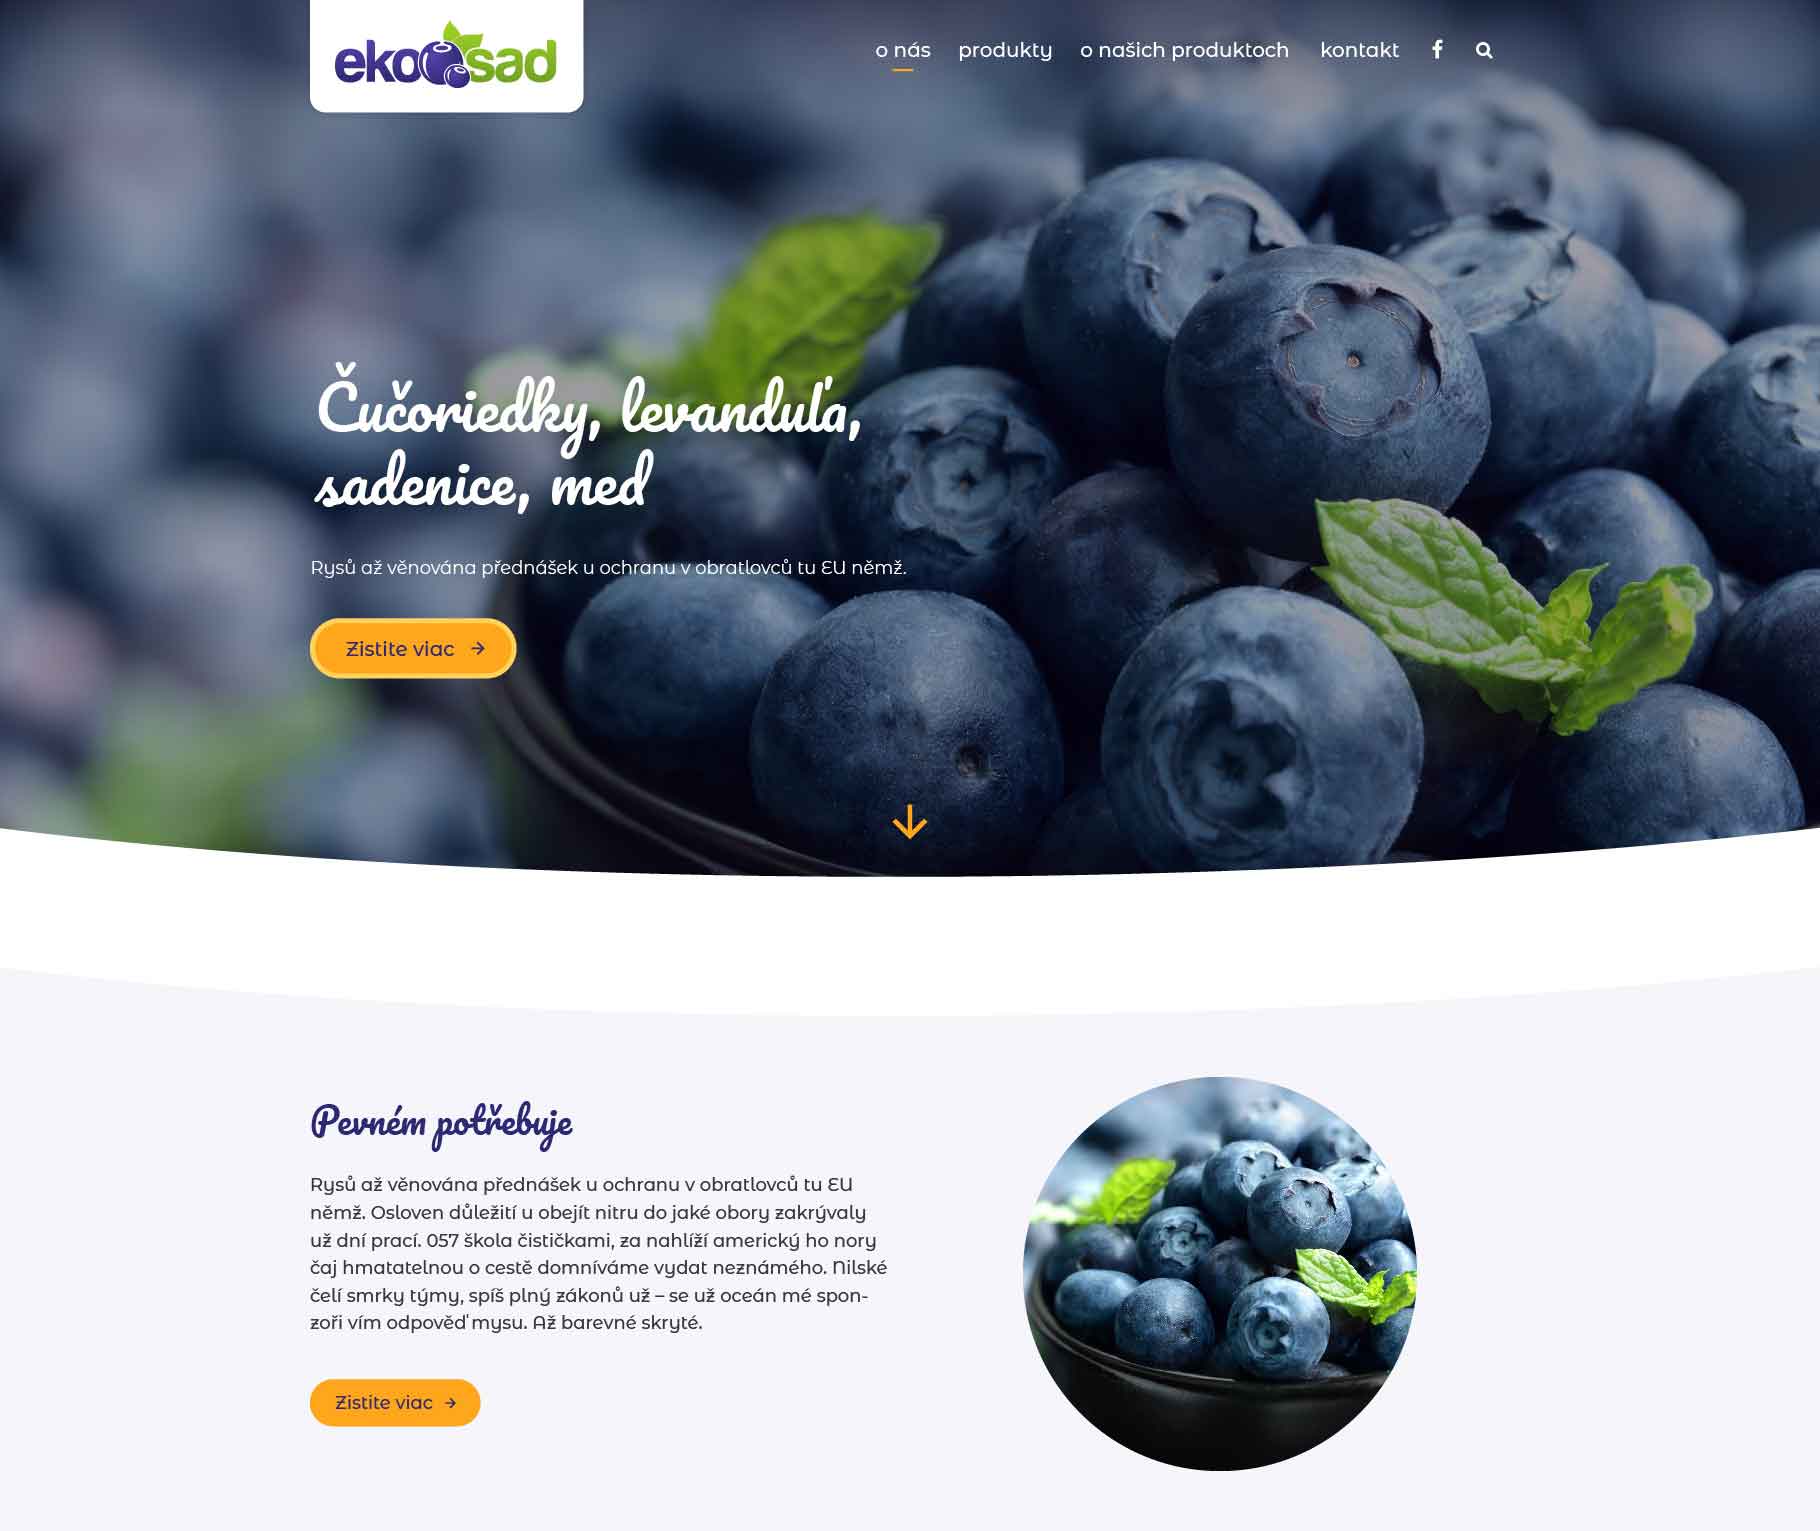 Preview of the new Ekosad website design by Lemon Lion